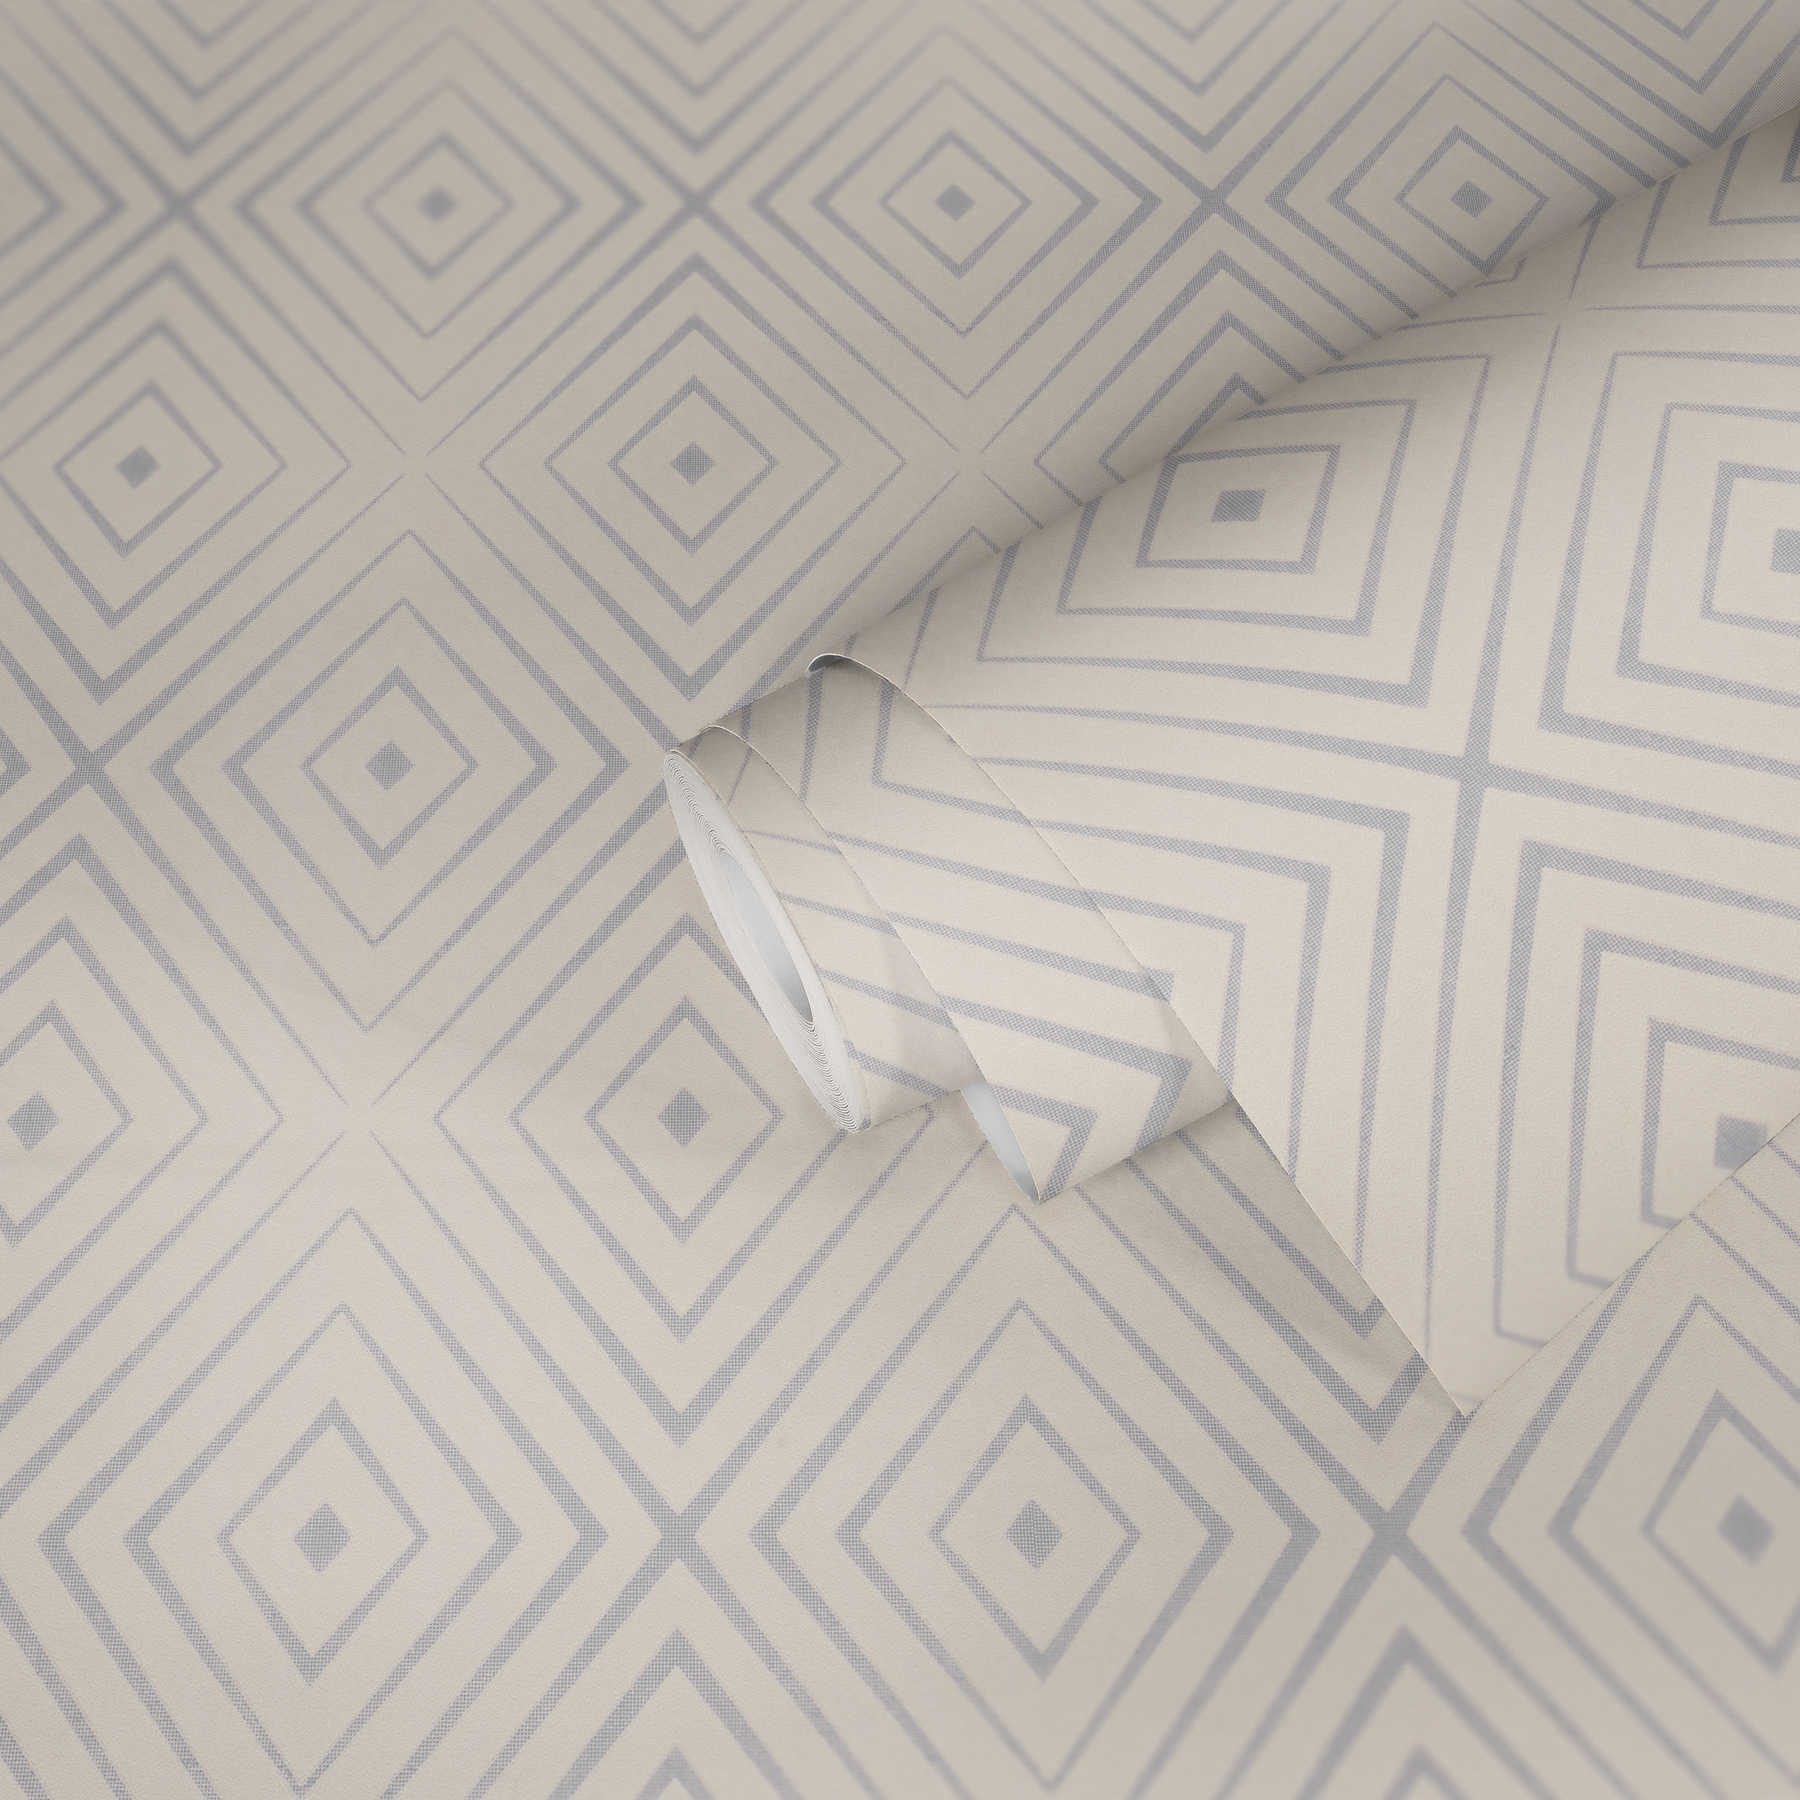             Non-woven wallpaper with diamond pattern & metallic effect - pink, grey
        